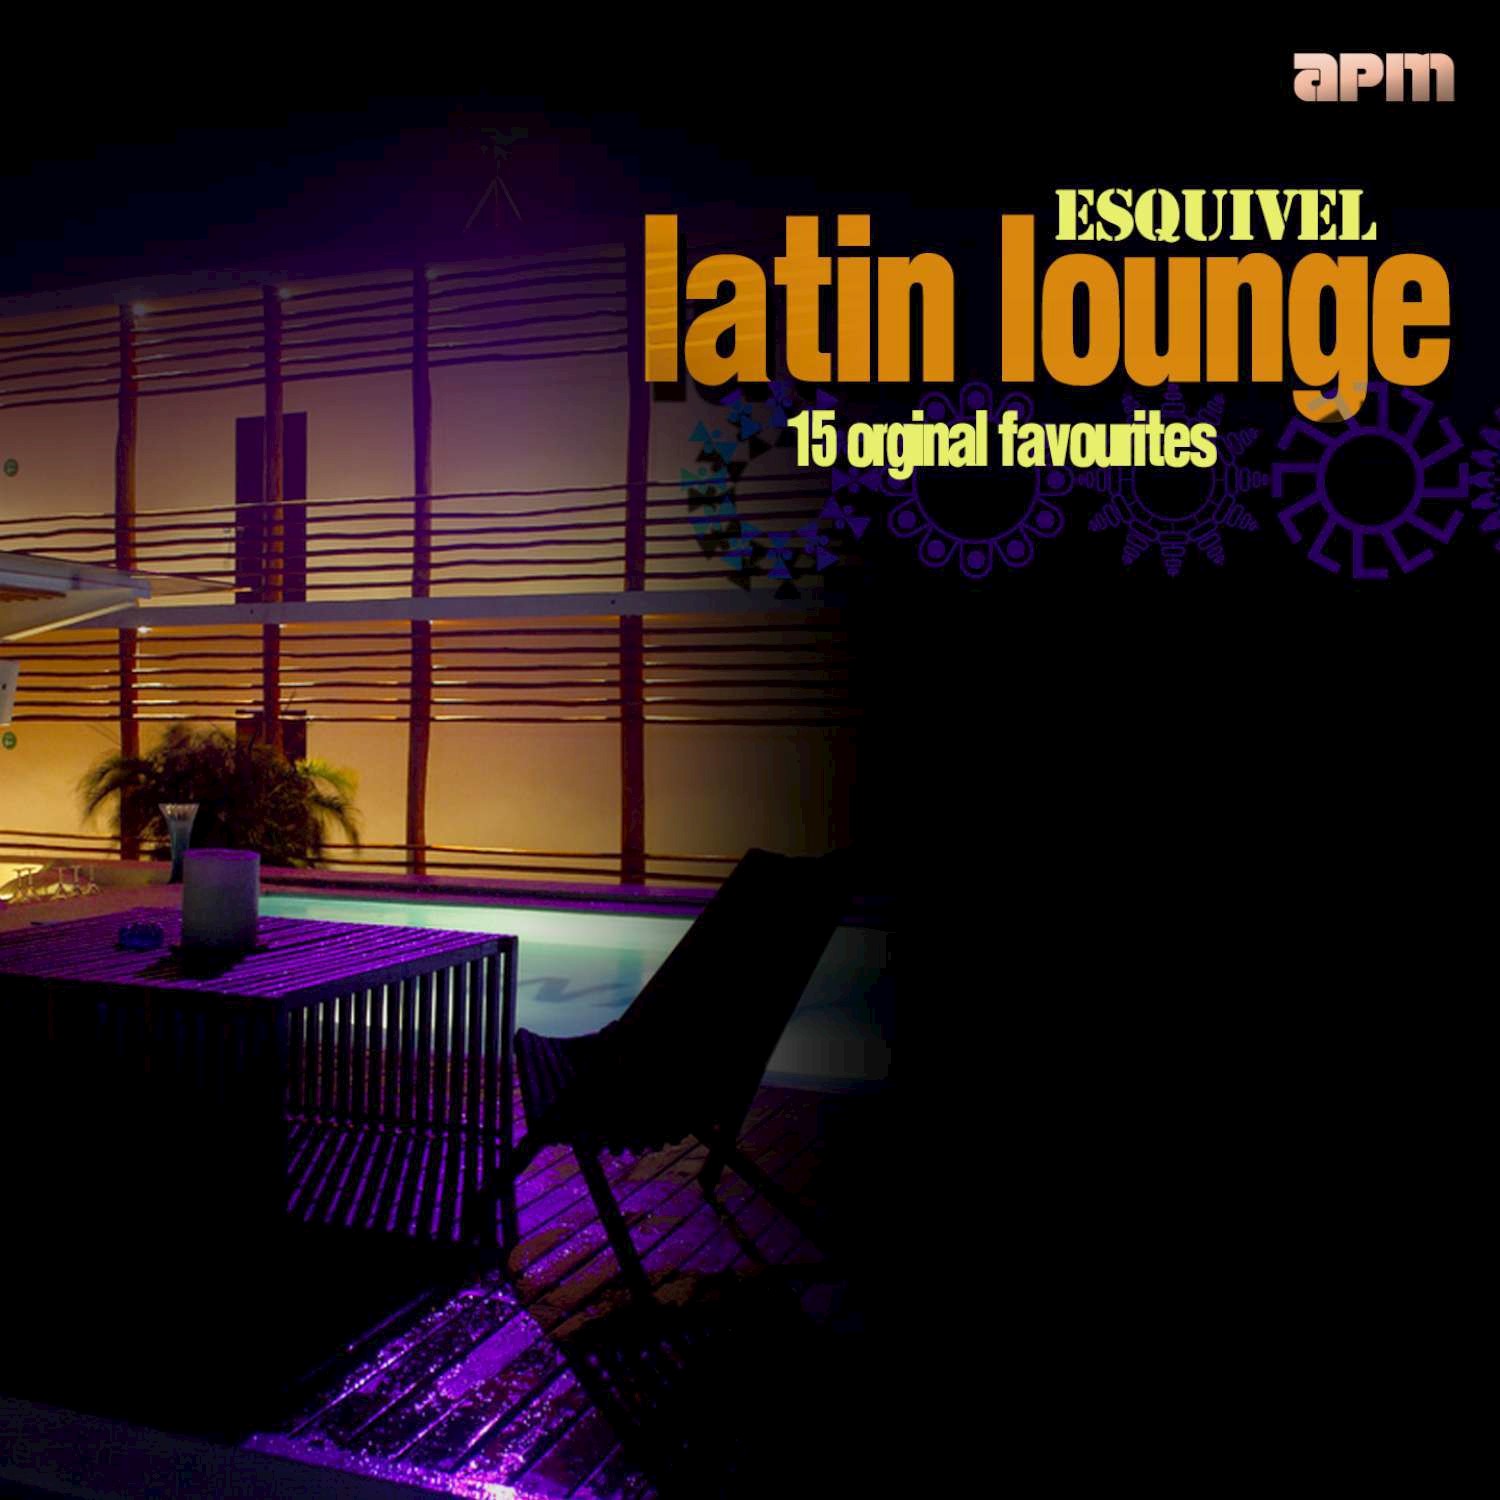 Latin Lounge - 15 Original Favourites